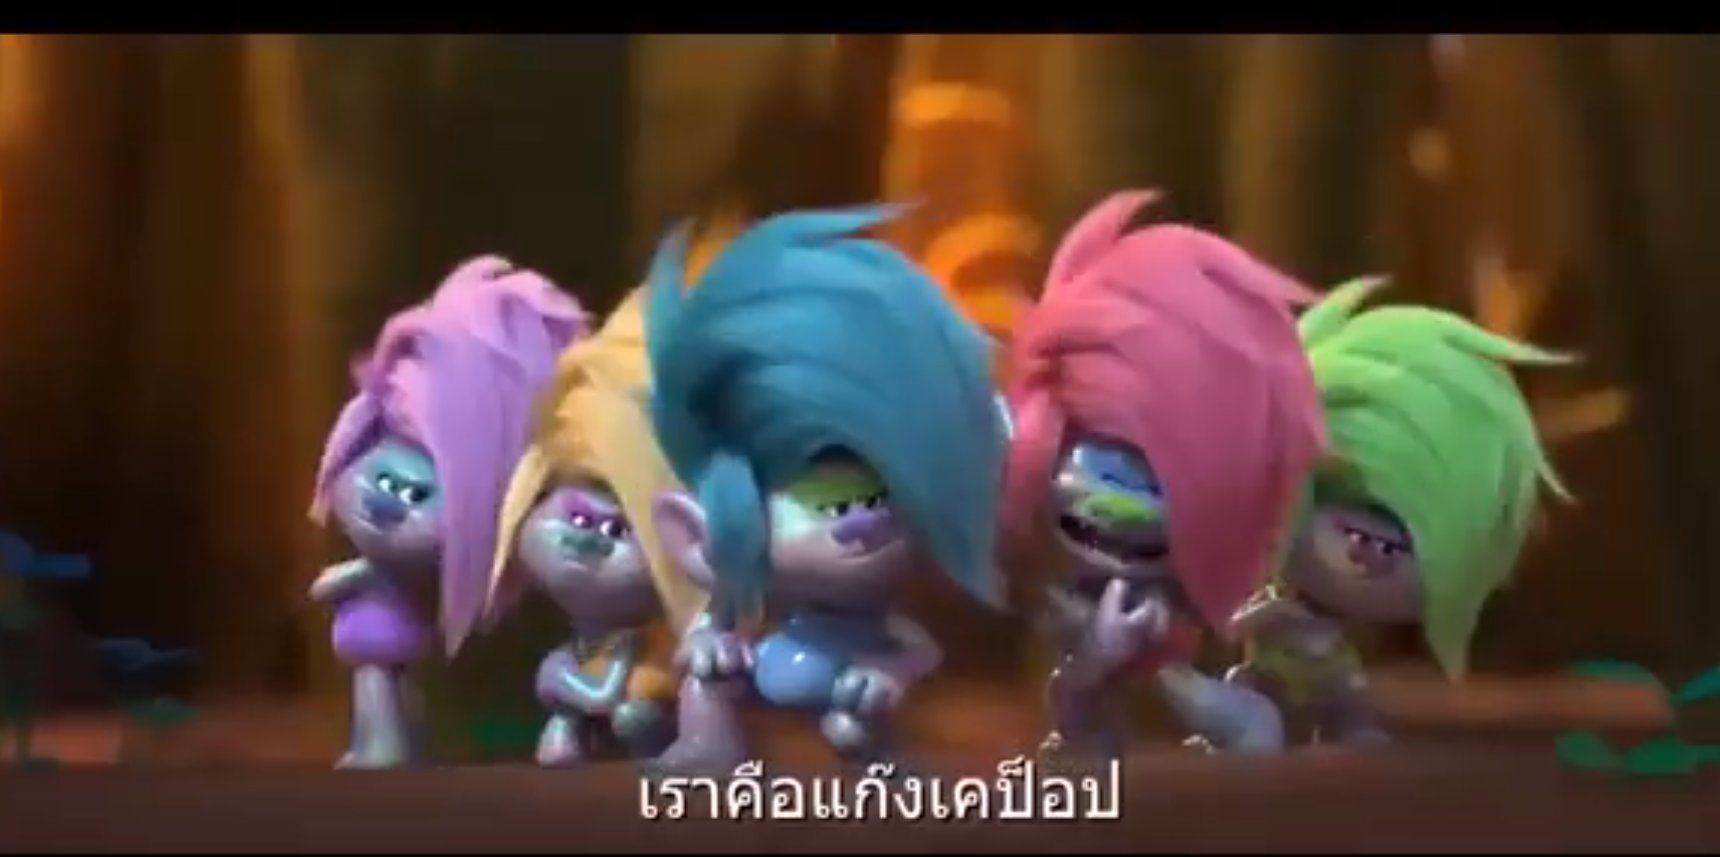 Red Velvet's Zimzalabim song and choreo to be part of DreamWorks' upcoming animated movie Trolls World Tour